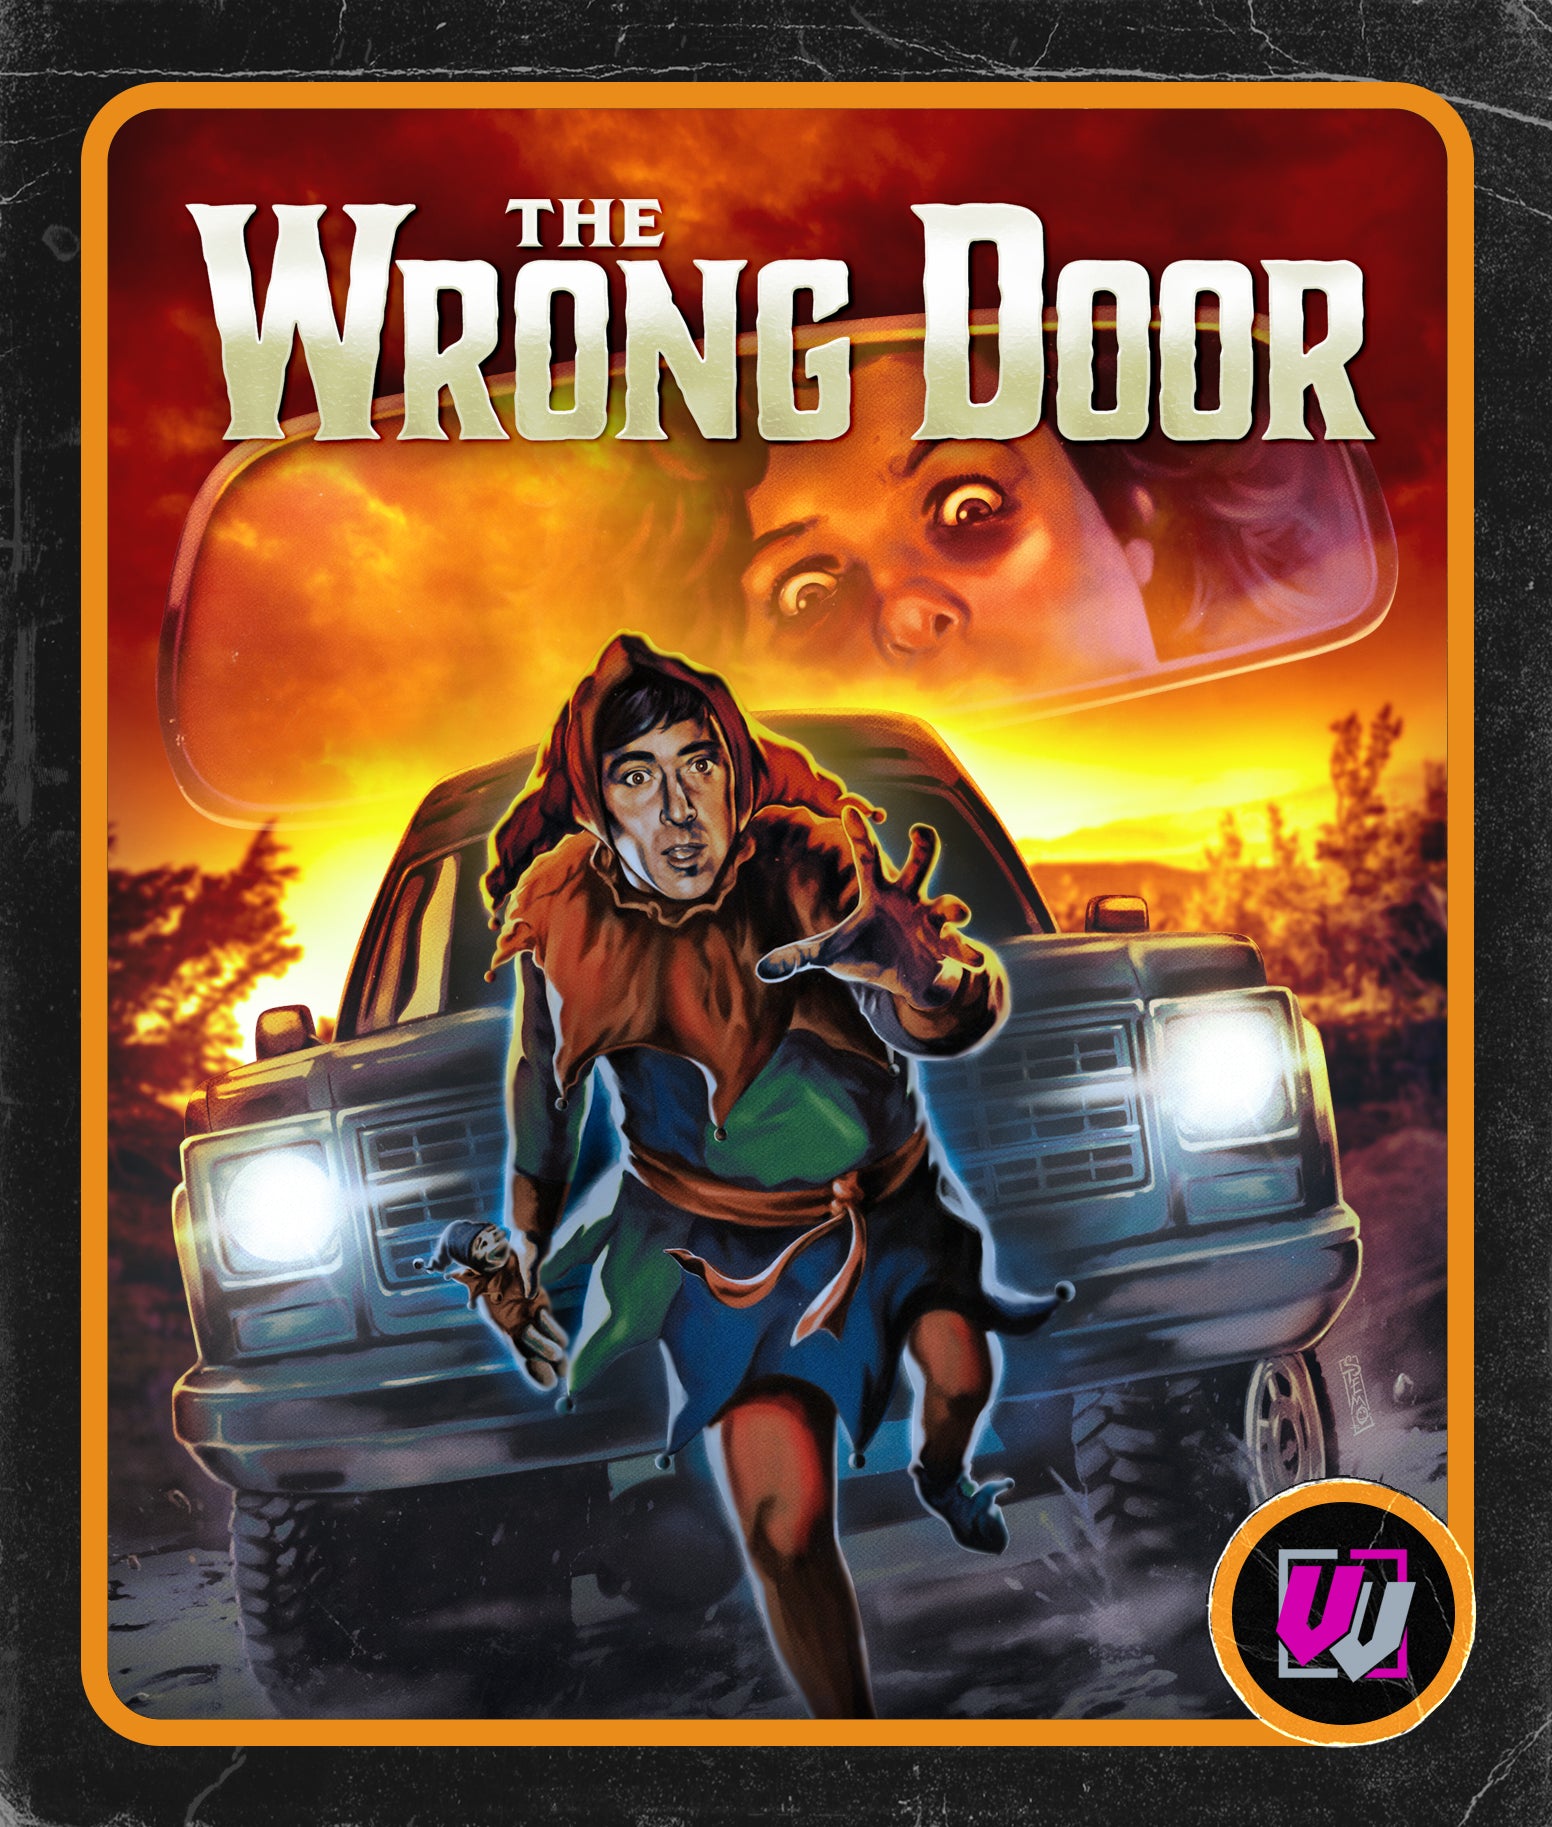 THE WRONG DOOR BLU-RAY